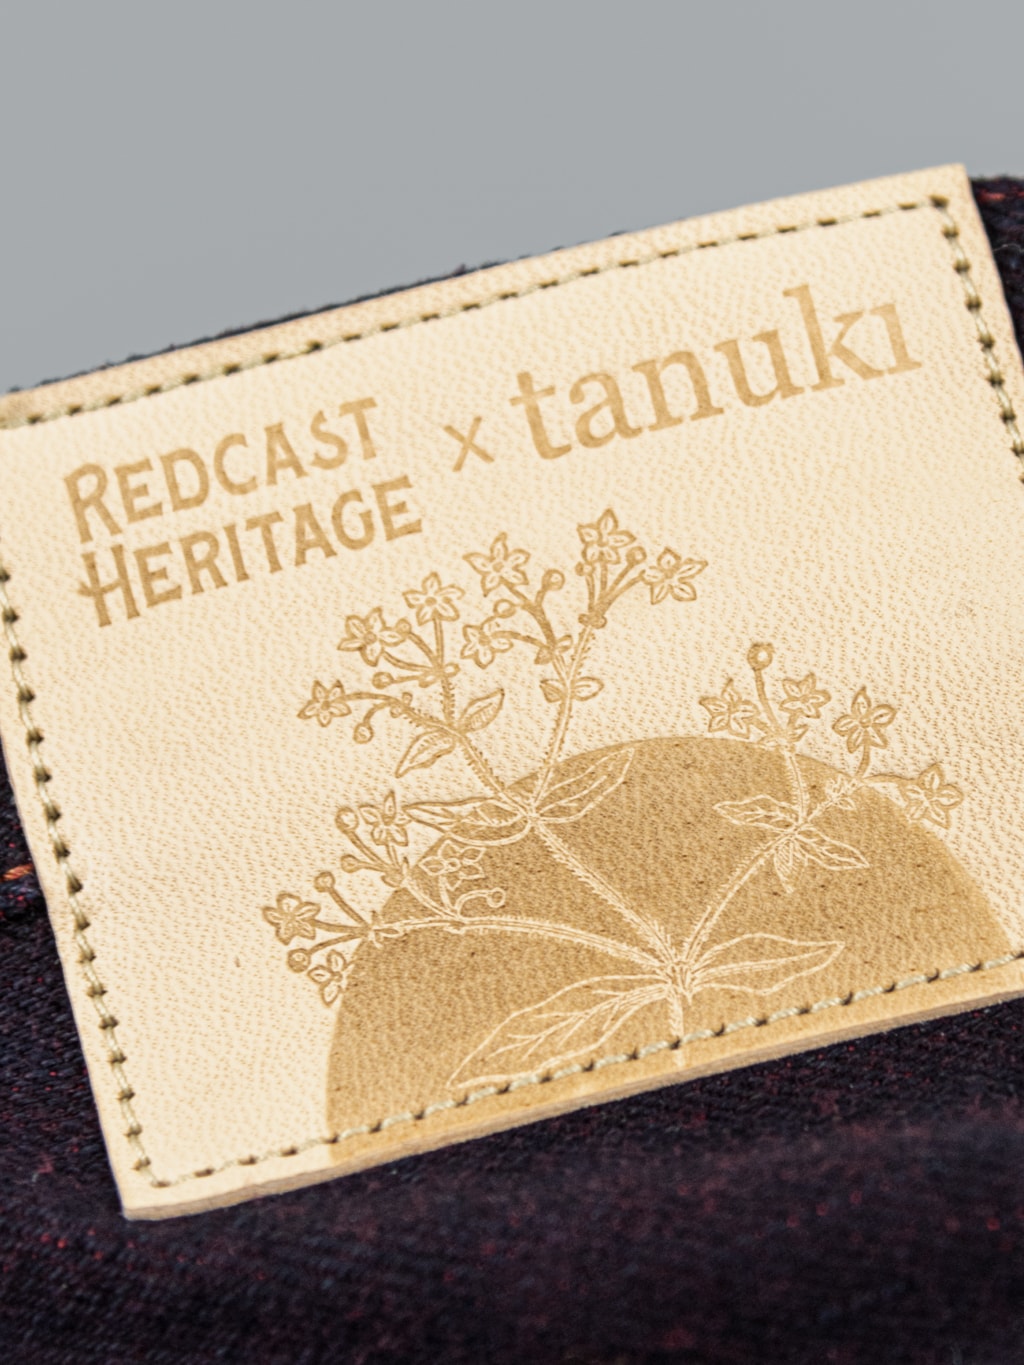 Redcast Heritage x Tanuki "Homura" Akane Overdye Slim Straight Jeans